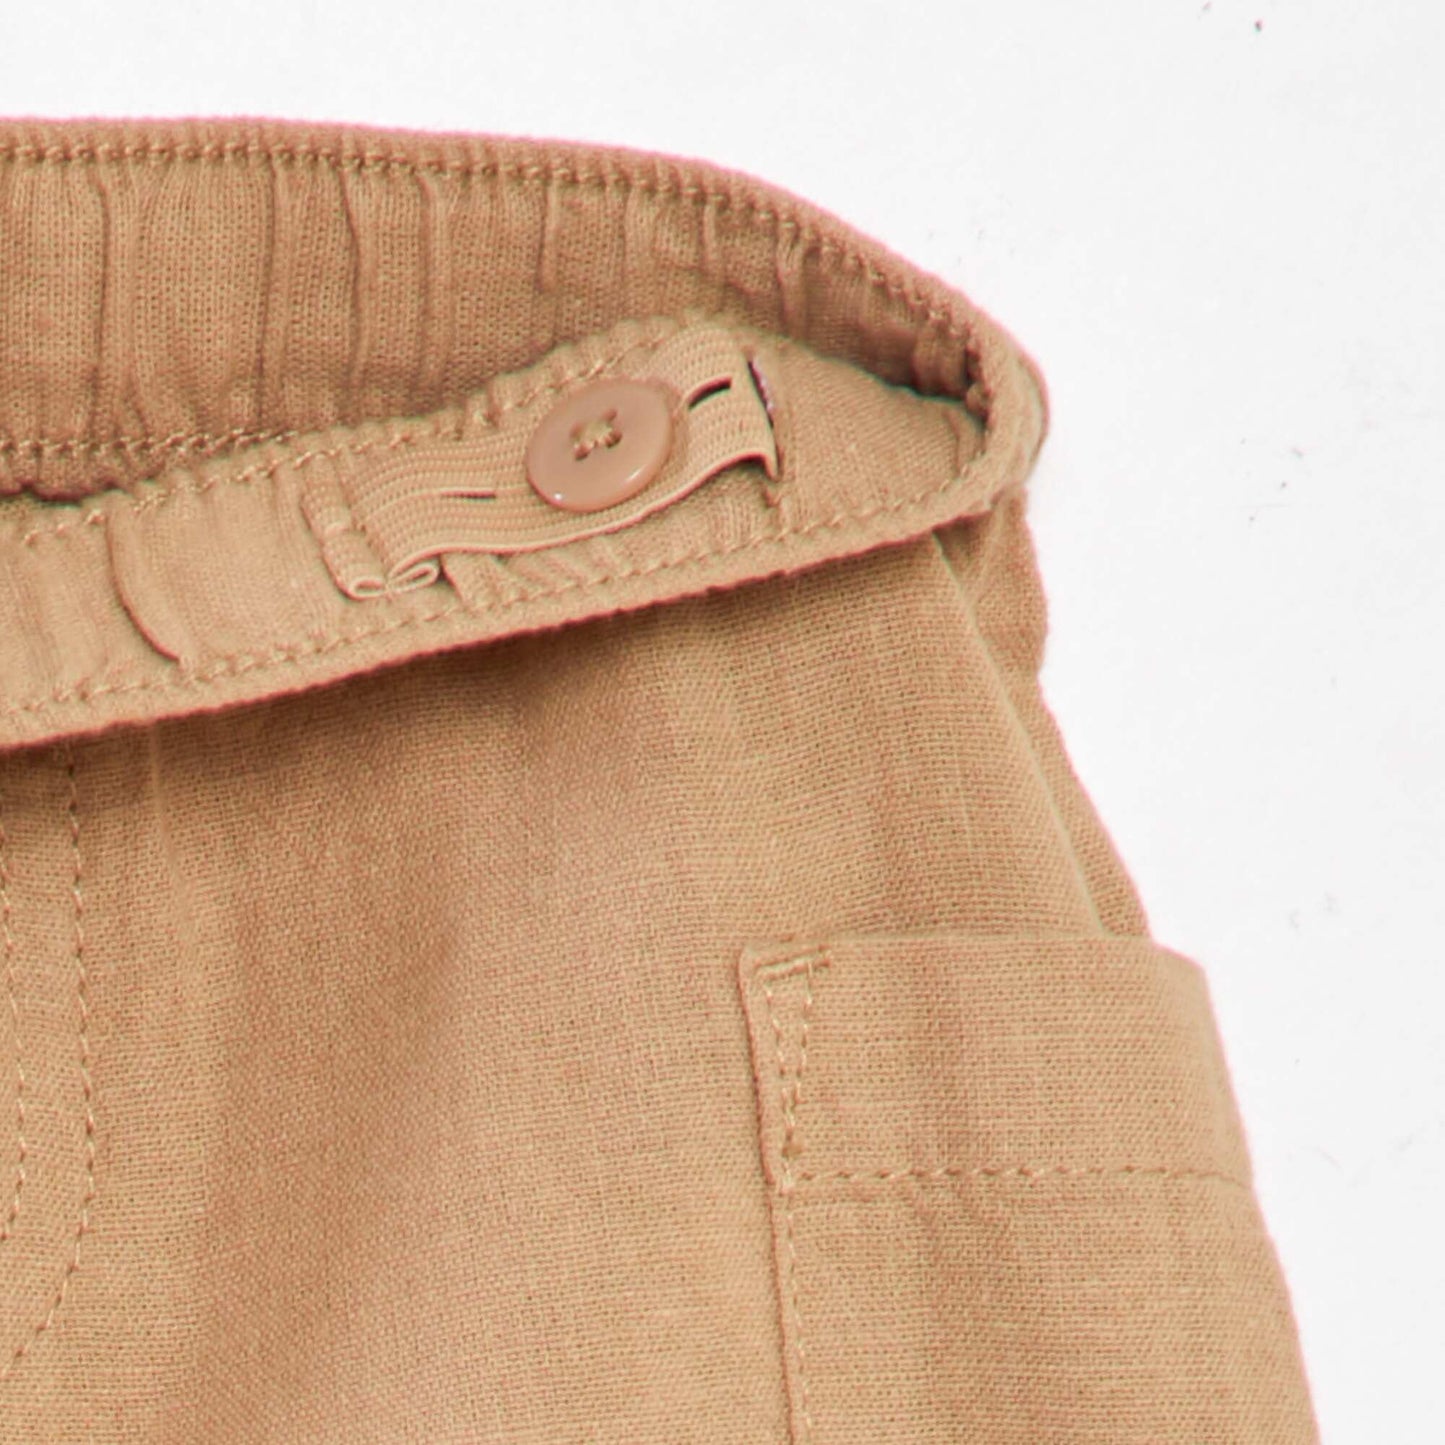 Cotton and linen Bermuda shorts BEIGE